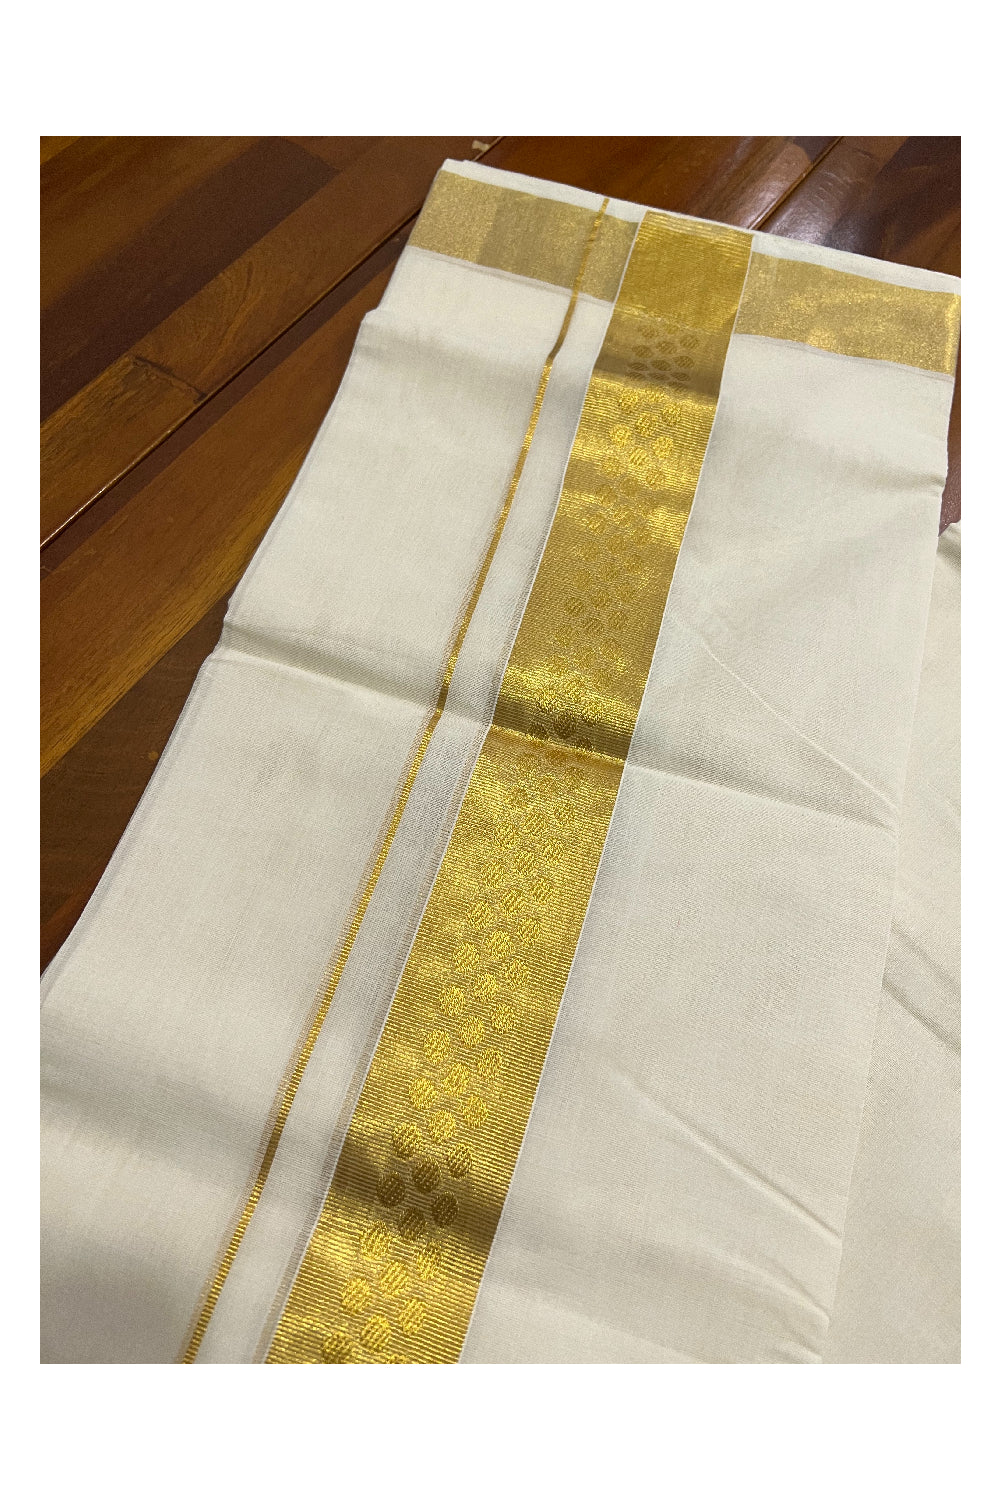 Southloom Balaramapuram Handloom Pure Cotton Wedding Mundu with Kasavu Woven Small Polka Design Border (South Indian Dhoti)